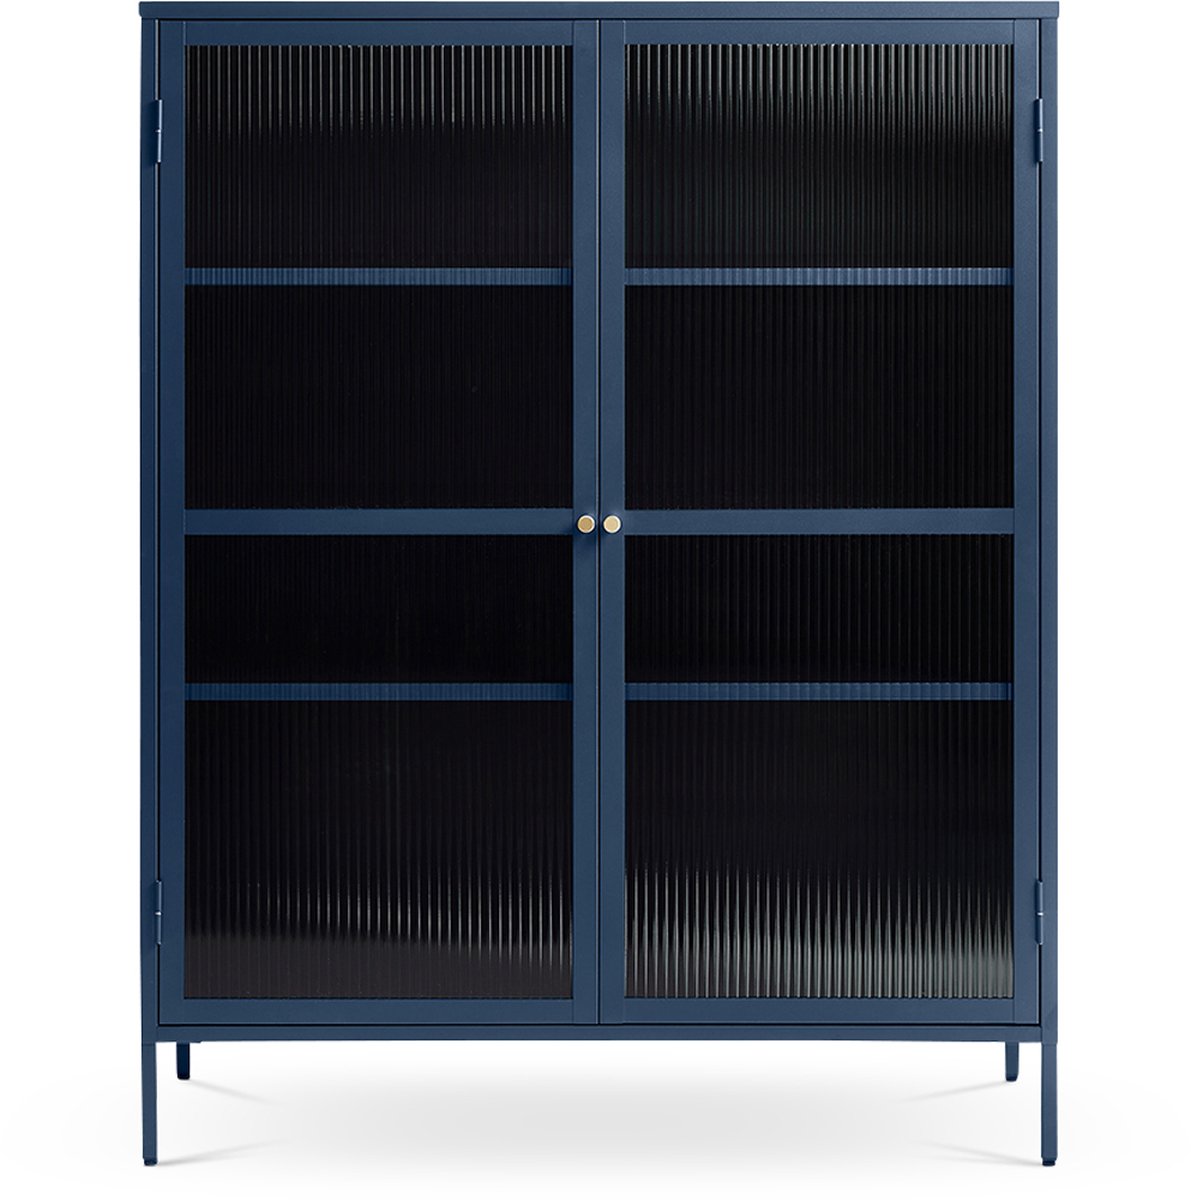 Olivine Katja metalen vitrinekast - 111 x 140 cm - Blauw